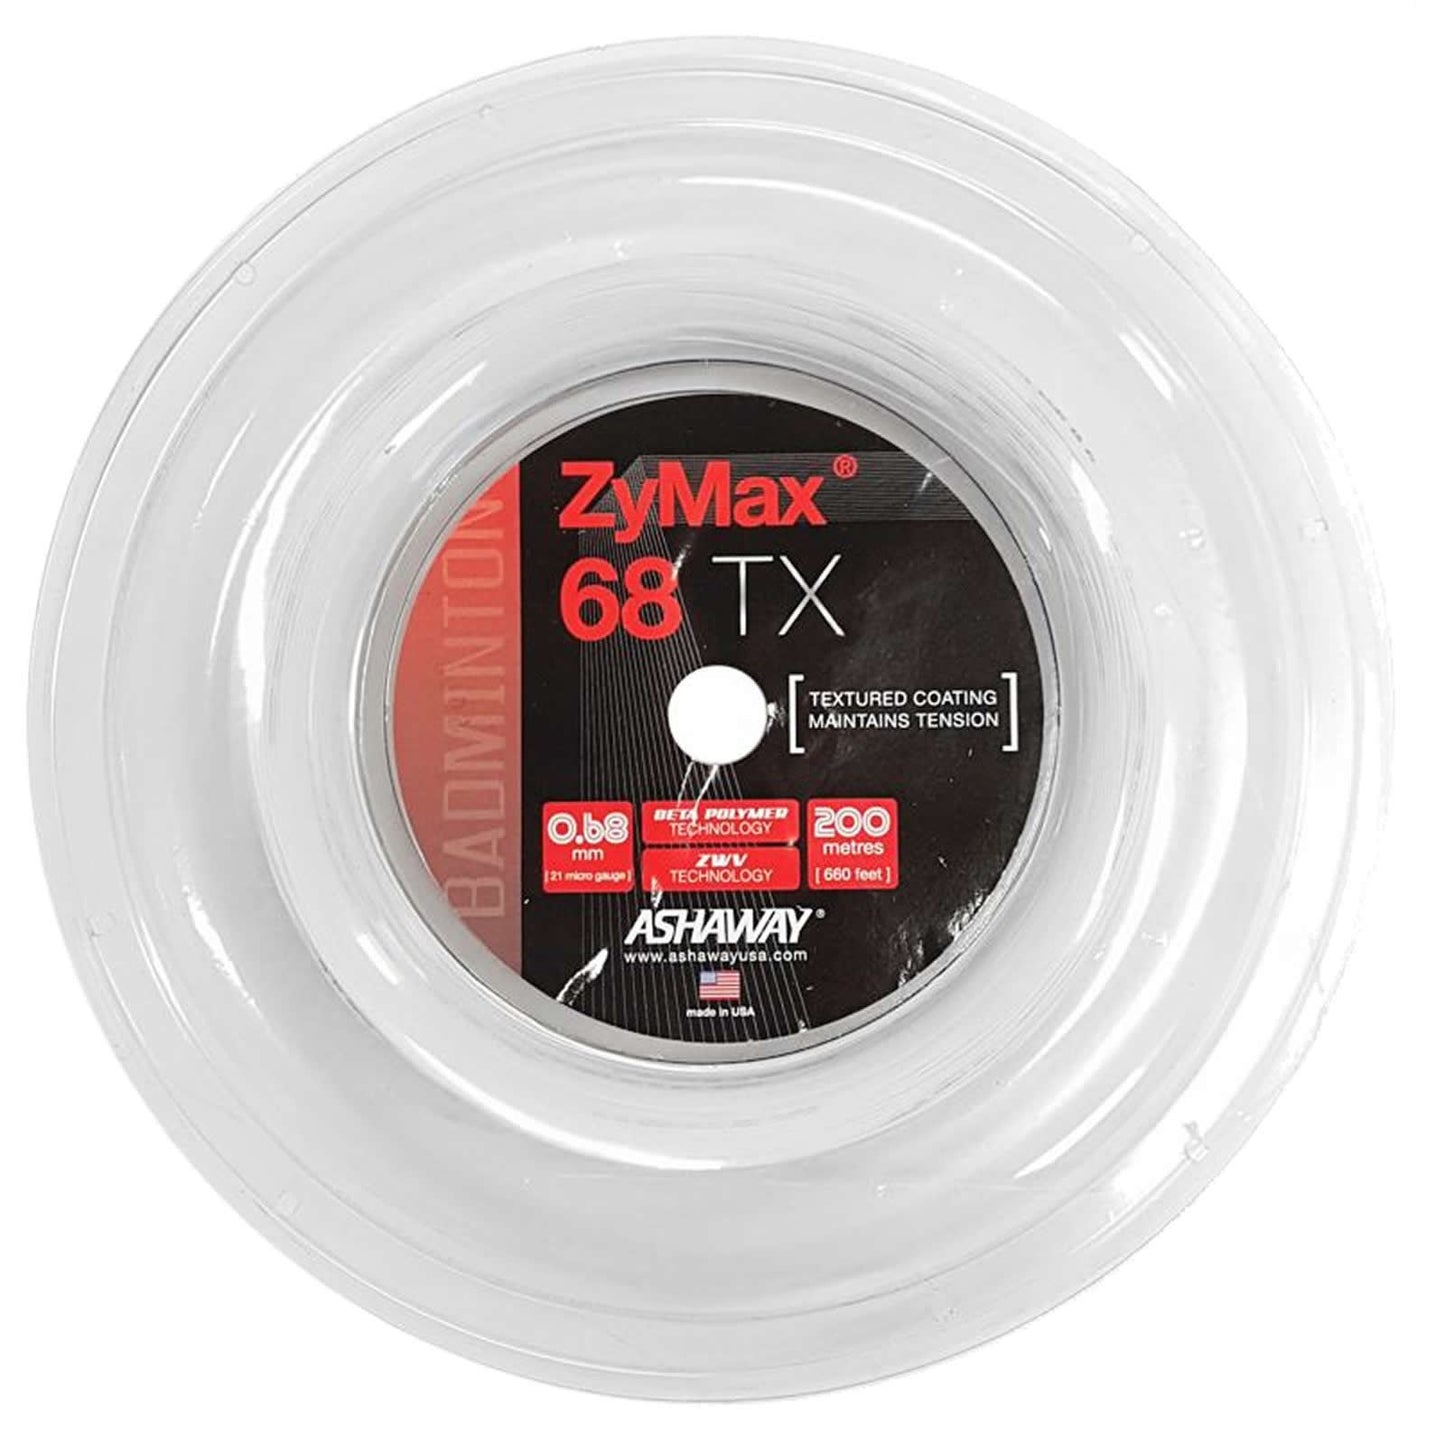 Ashaway Zymax 68 TX Badminton String White - 0.68MM - 200m Reel